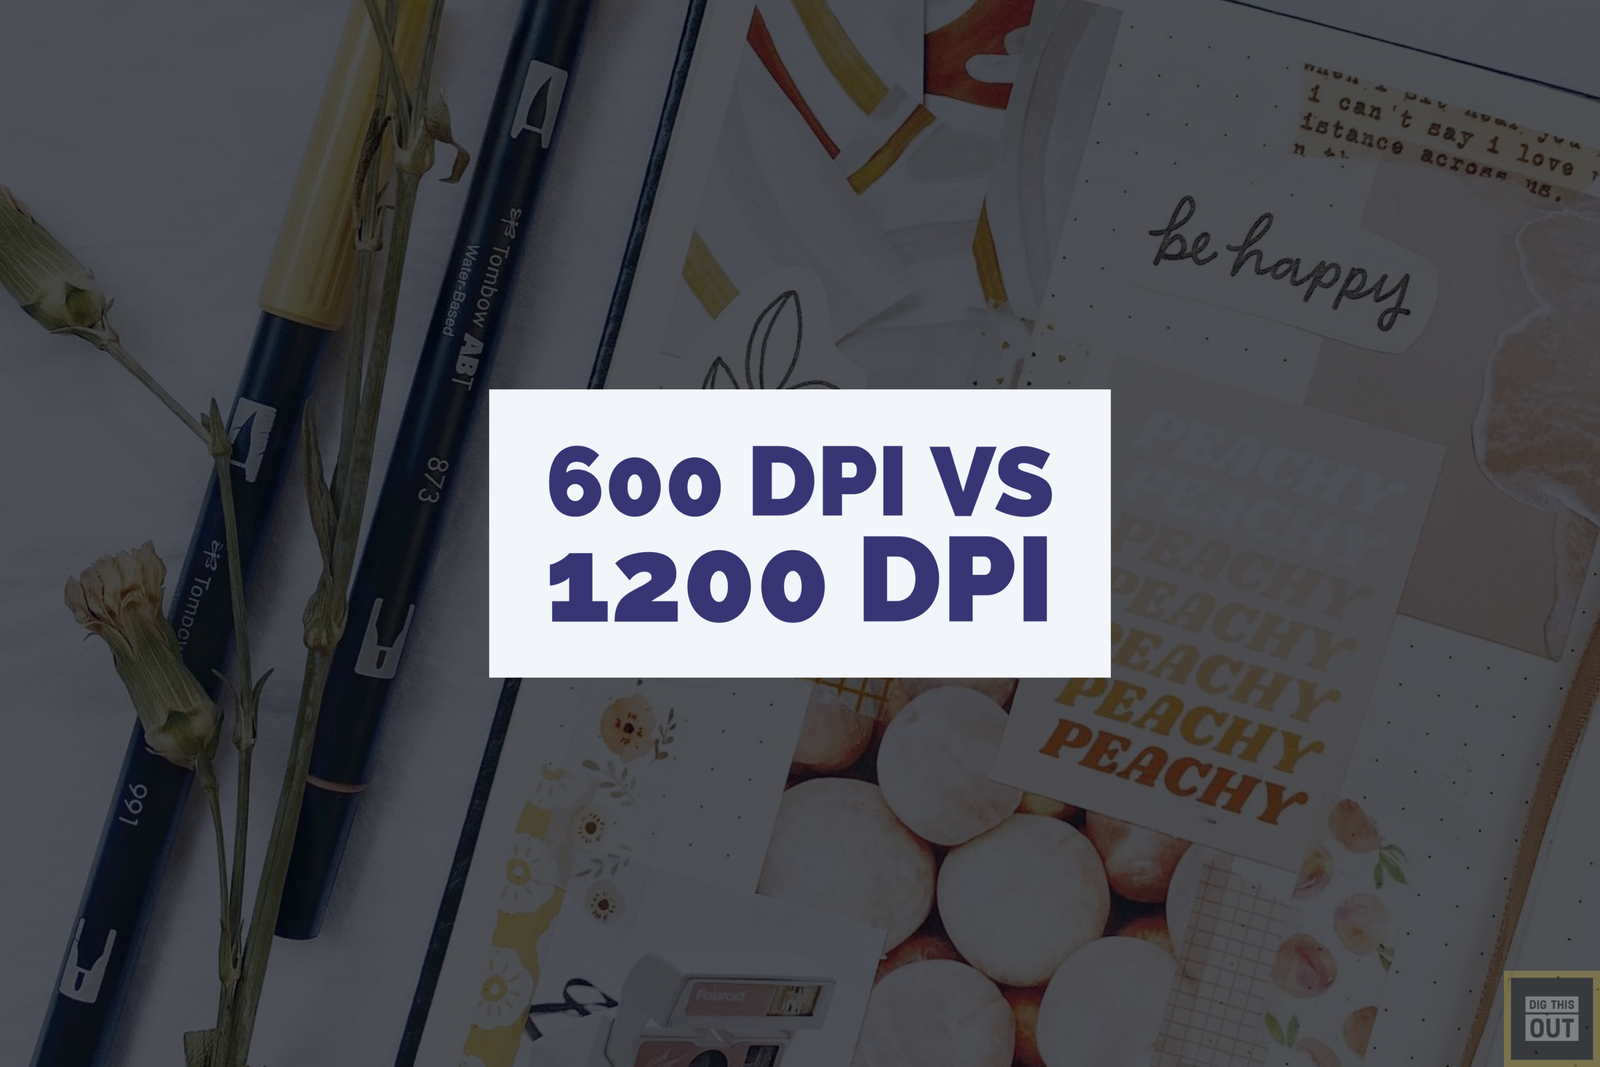 DPI vs 1200 DPI Printer - The Differences